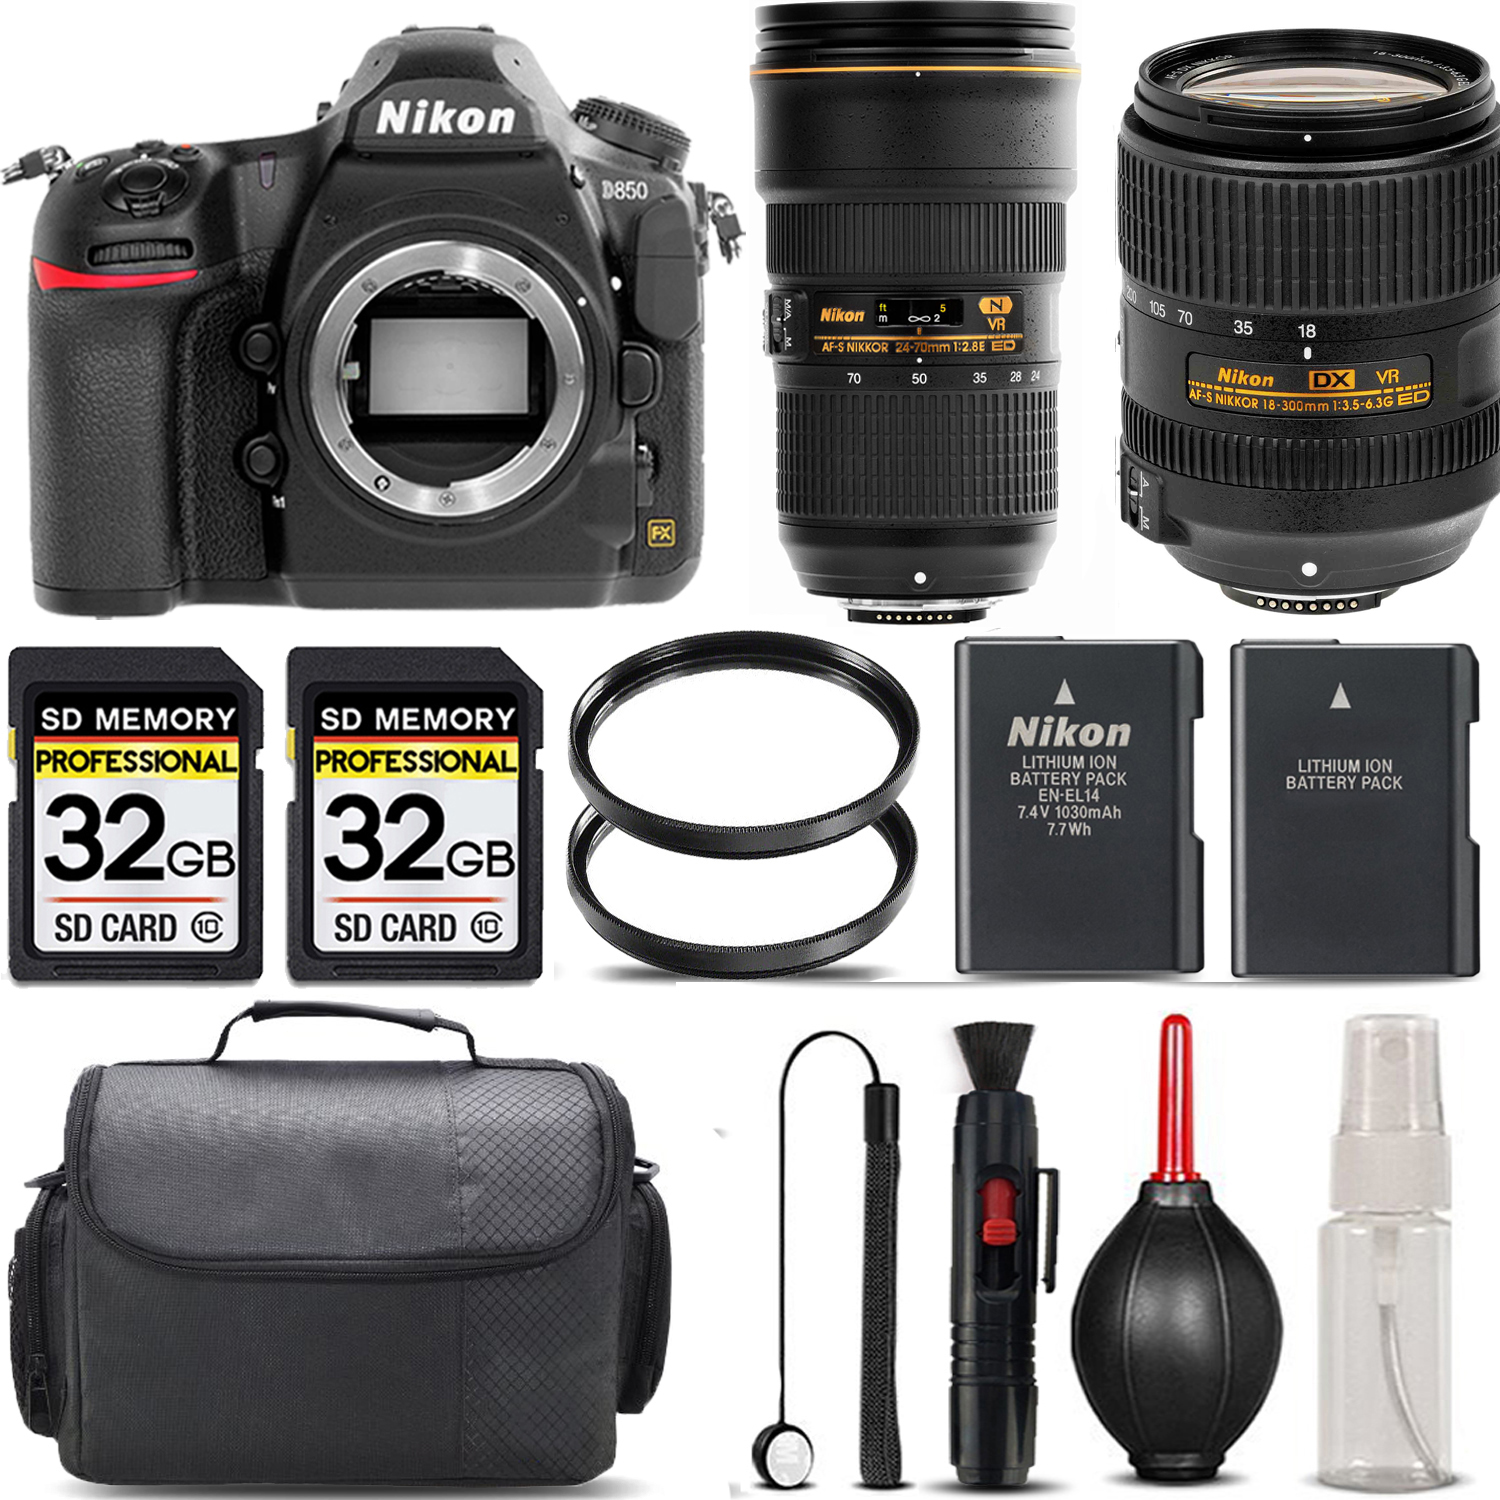 D850 DSLR Camera + 18- 300mm VR Lens + 24-70mm Lens + 64GB - SAVE BIG KIT *FREE SHIPPING*